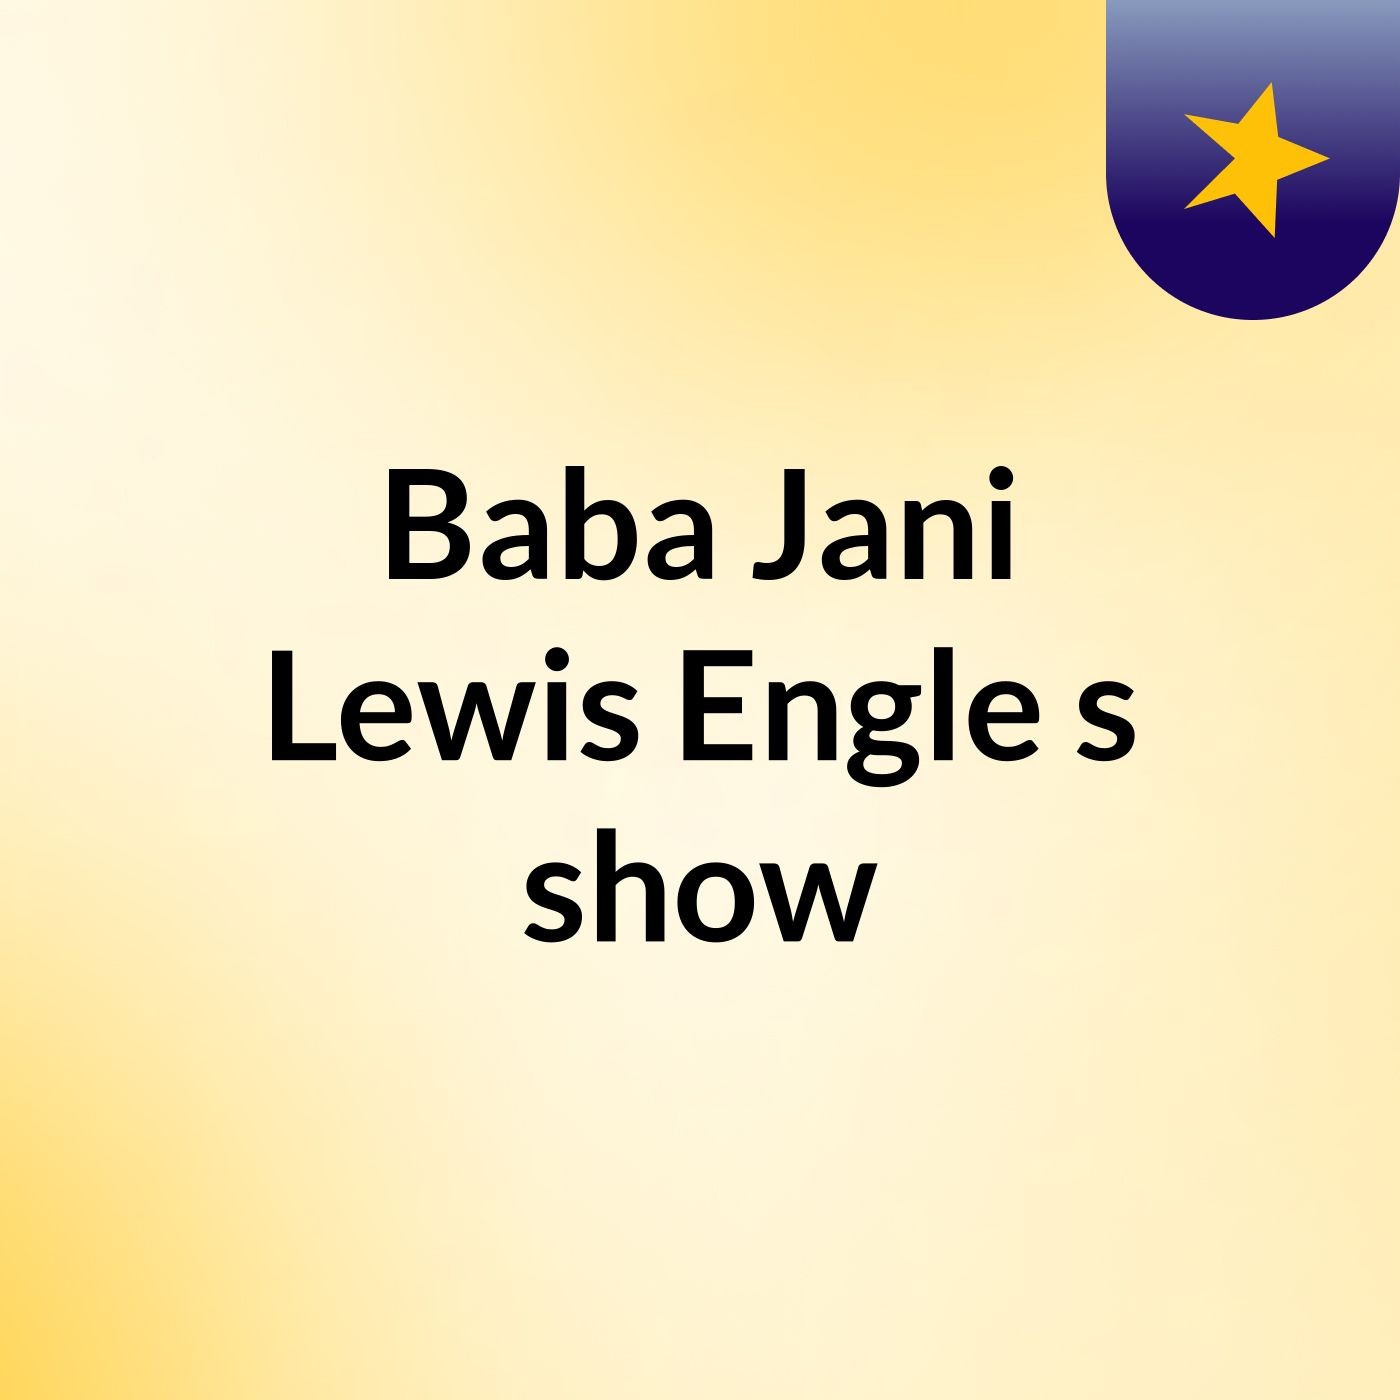 Episode 2 - Baba Jani, Lewis Engle's show